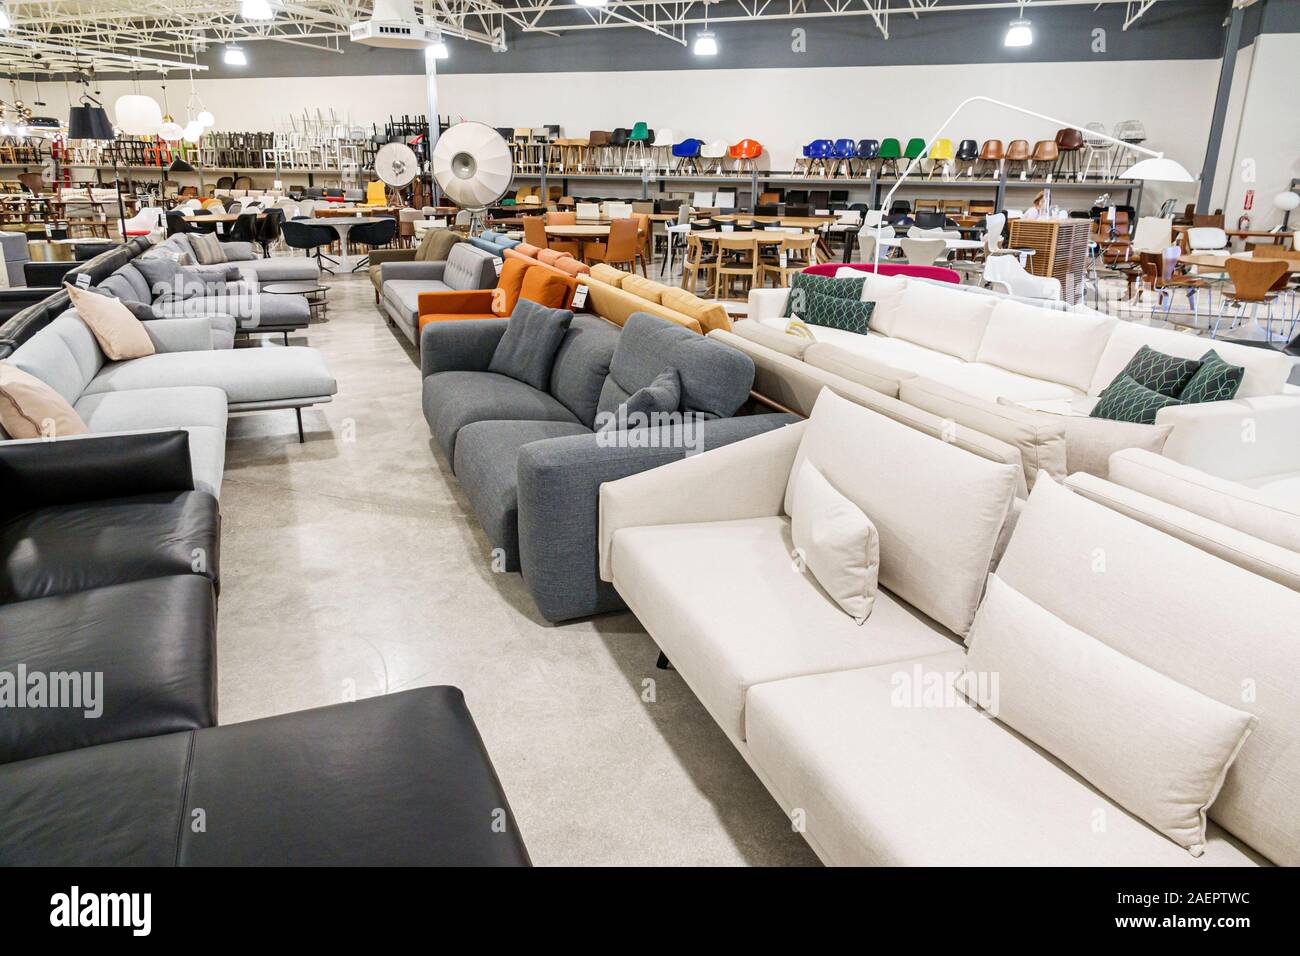 Furniture store sofa -Fotos und -Bildmaterial in hoher Auflösung – Alamy